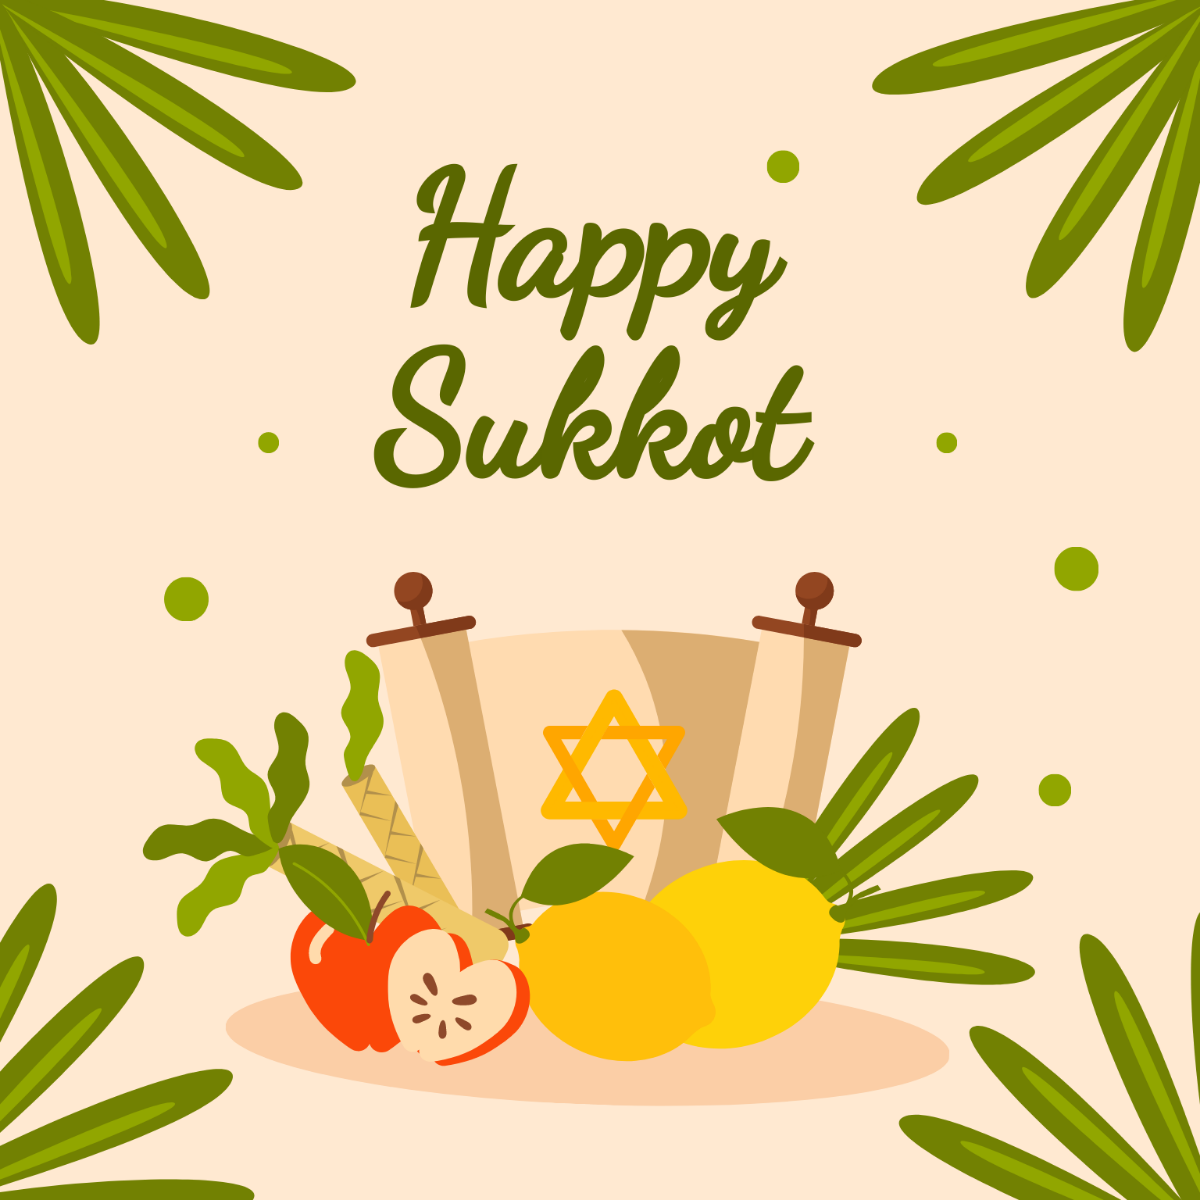 Free Happy Sukkot Illustration Template